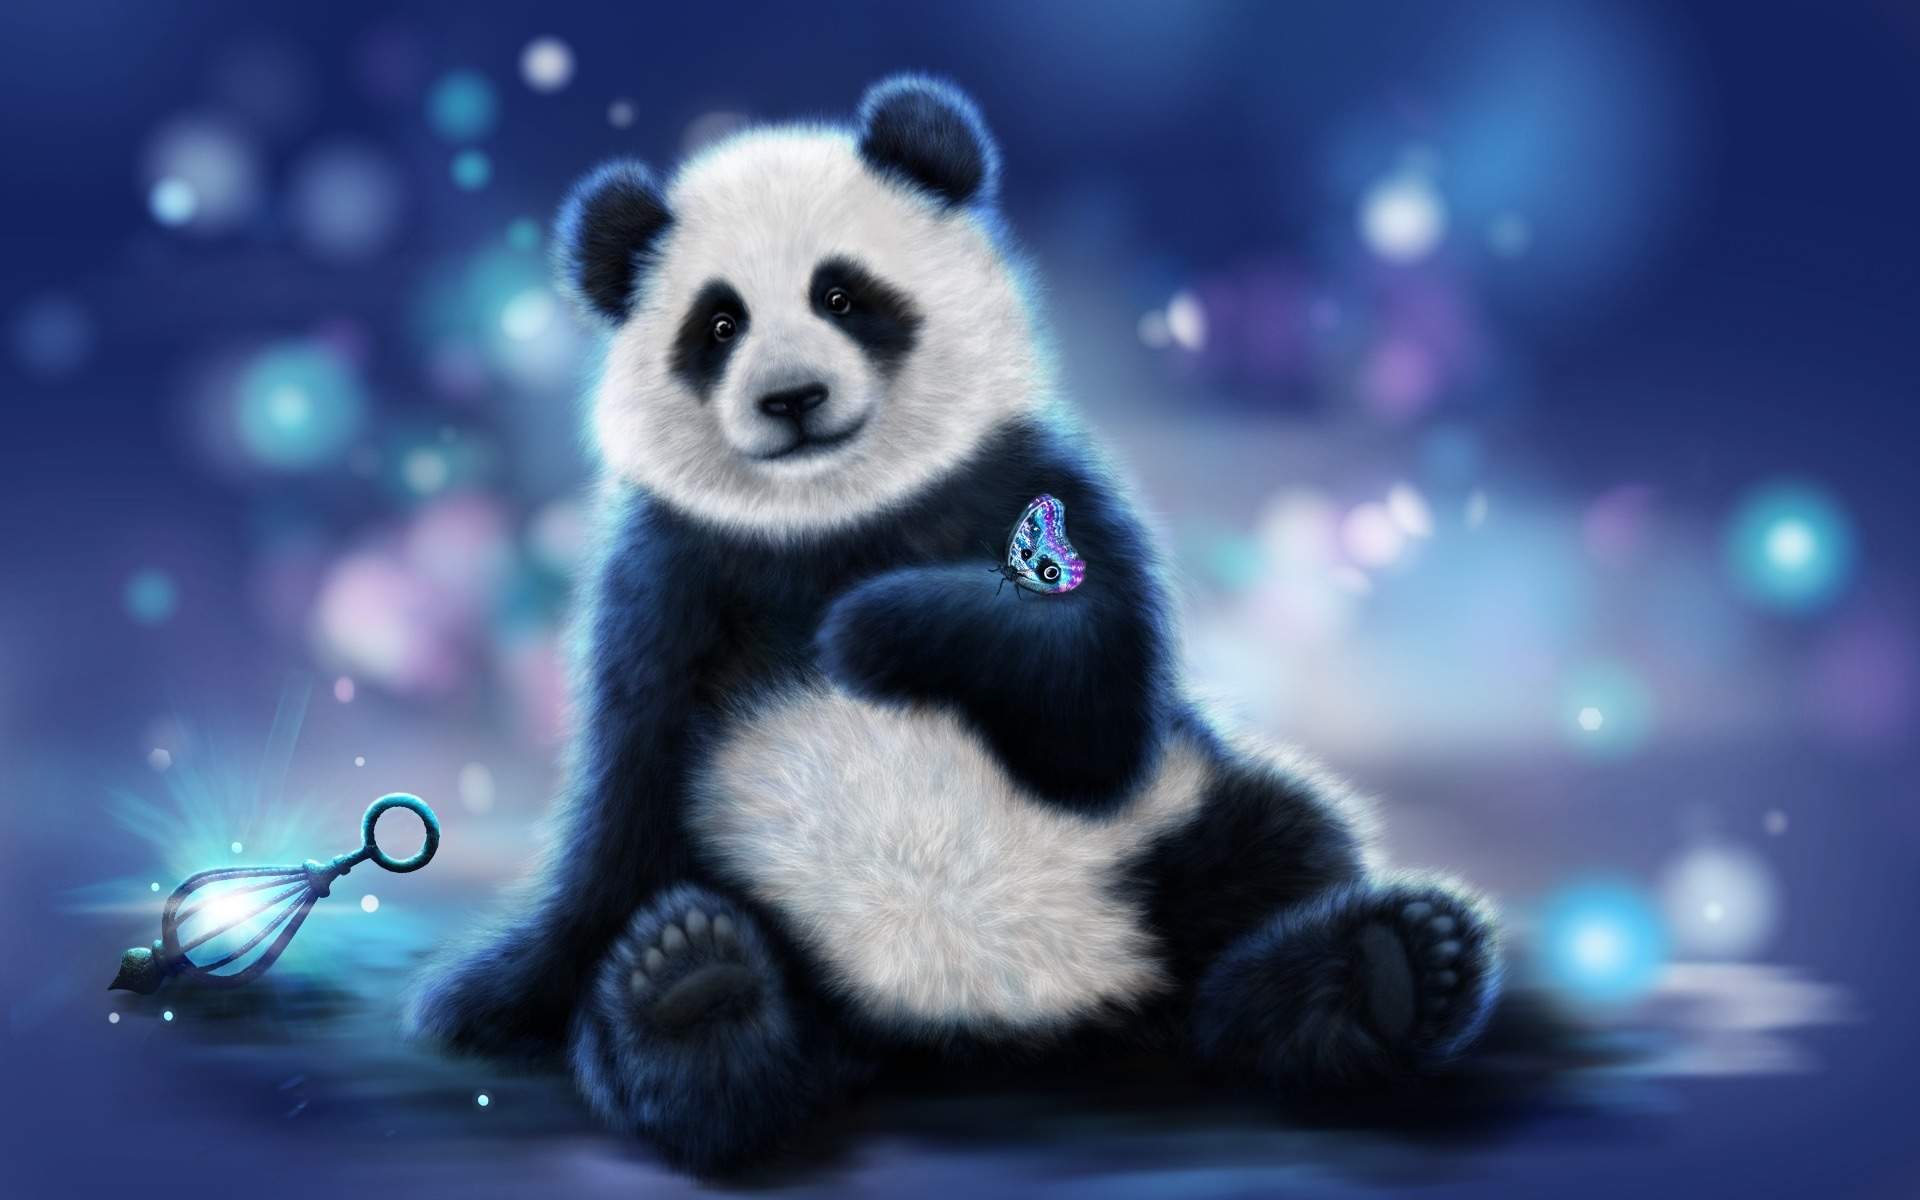 Panda Cute Wallpaper HD For Desktop Of Cute Panda Baby